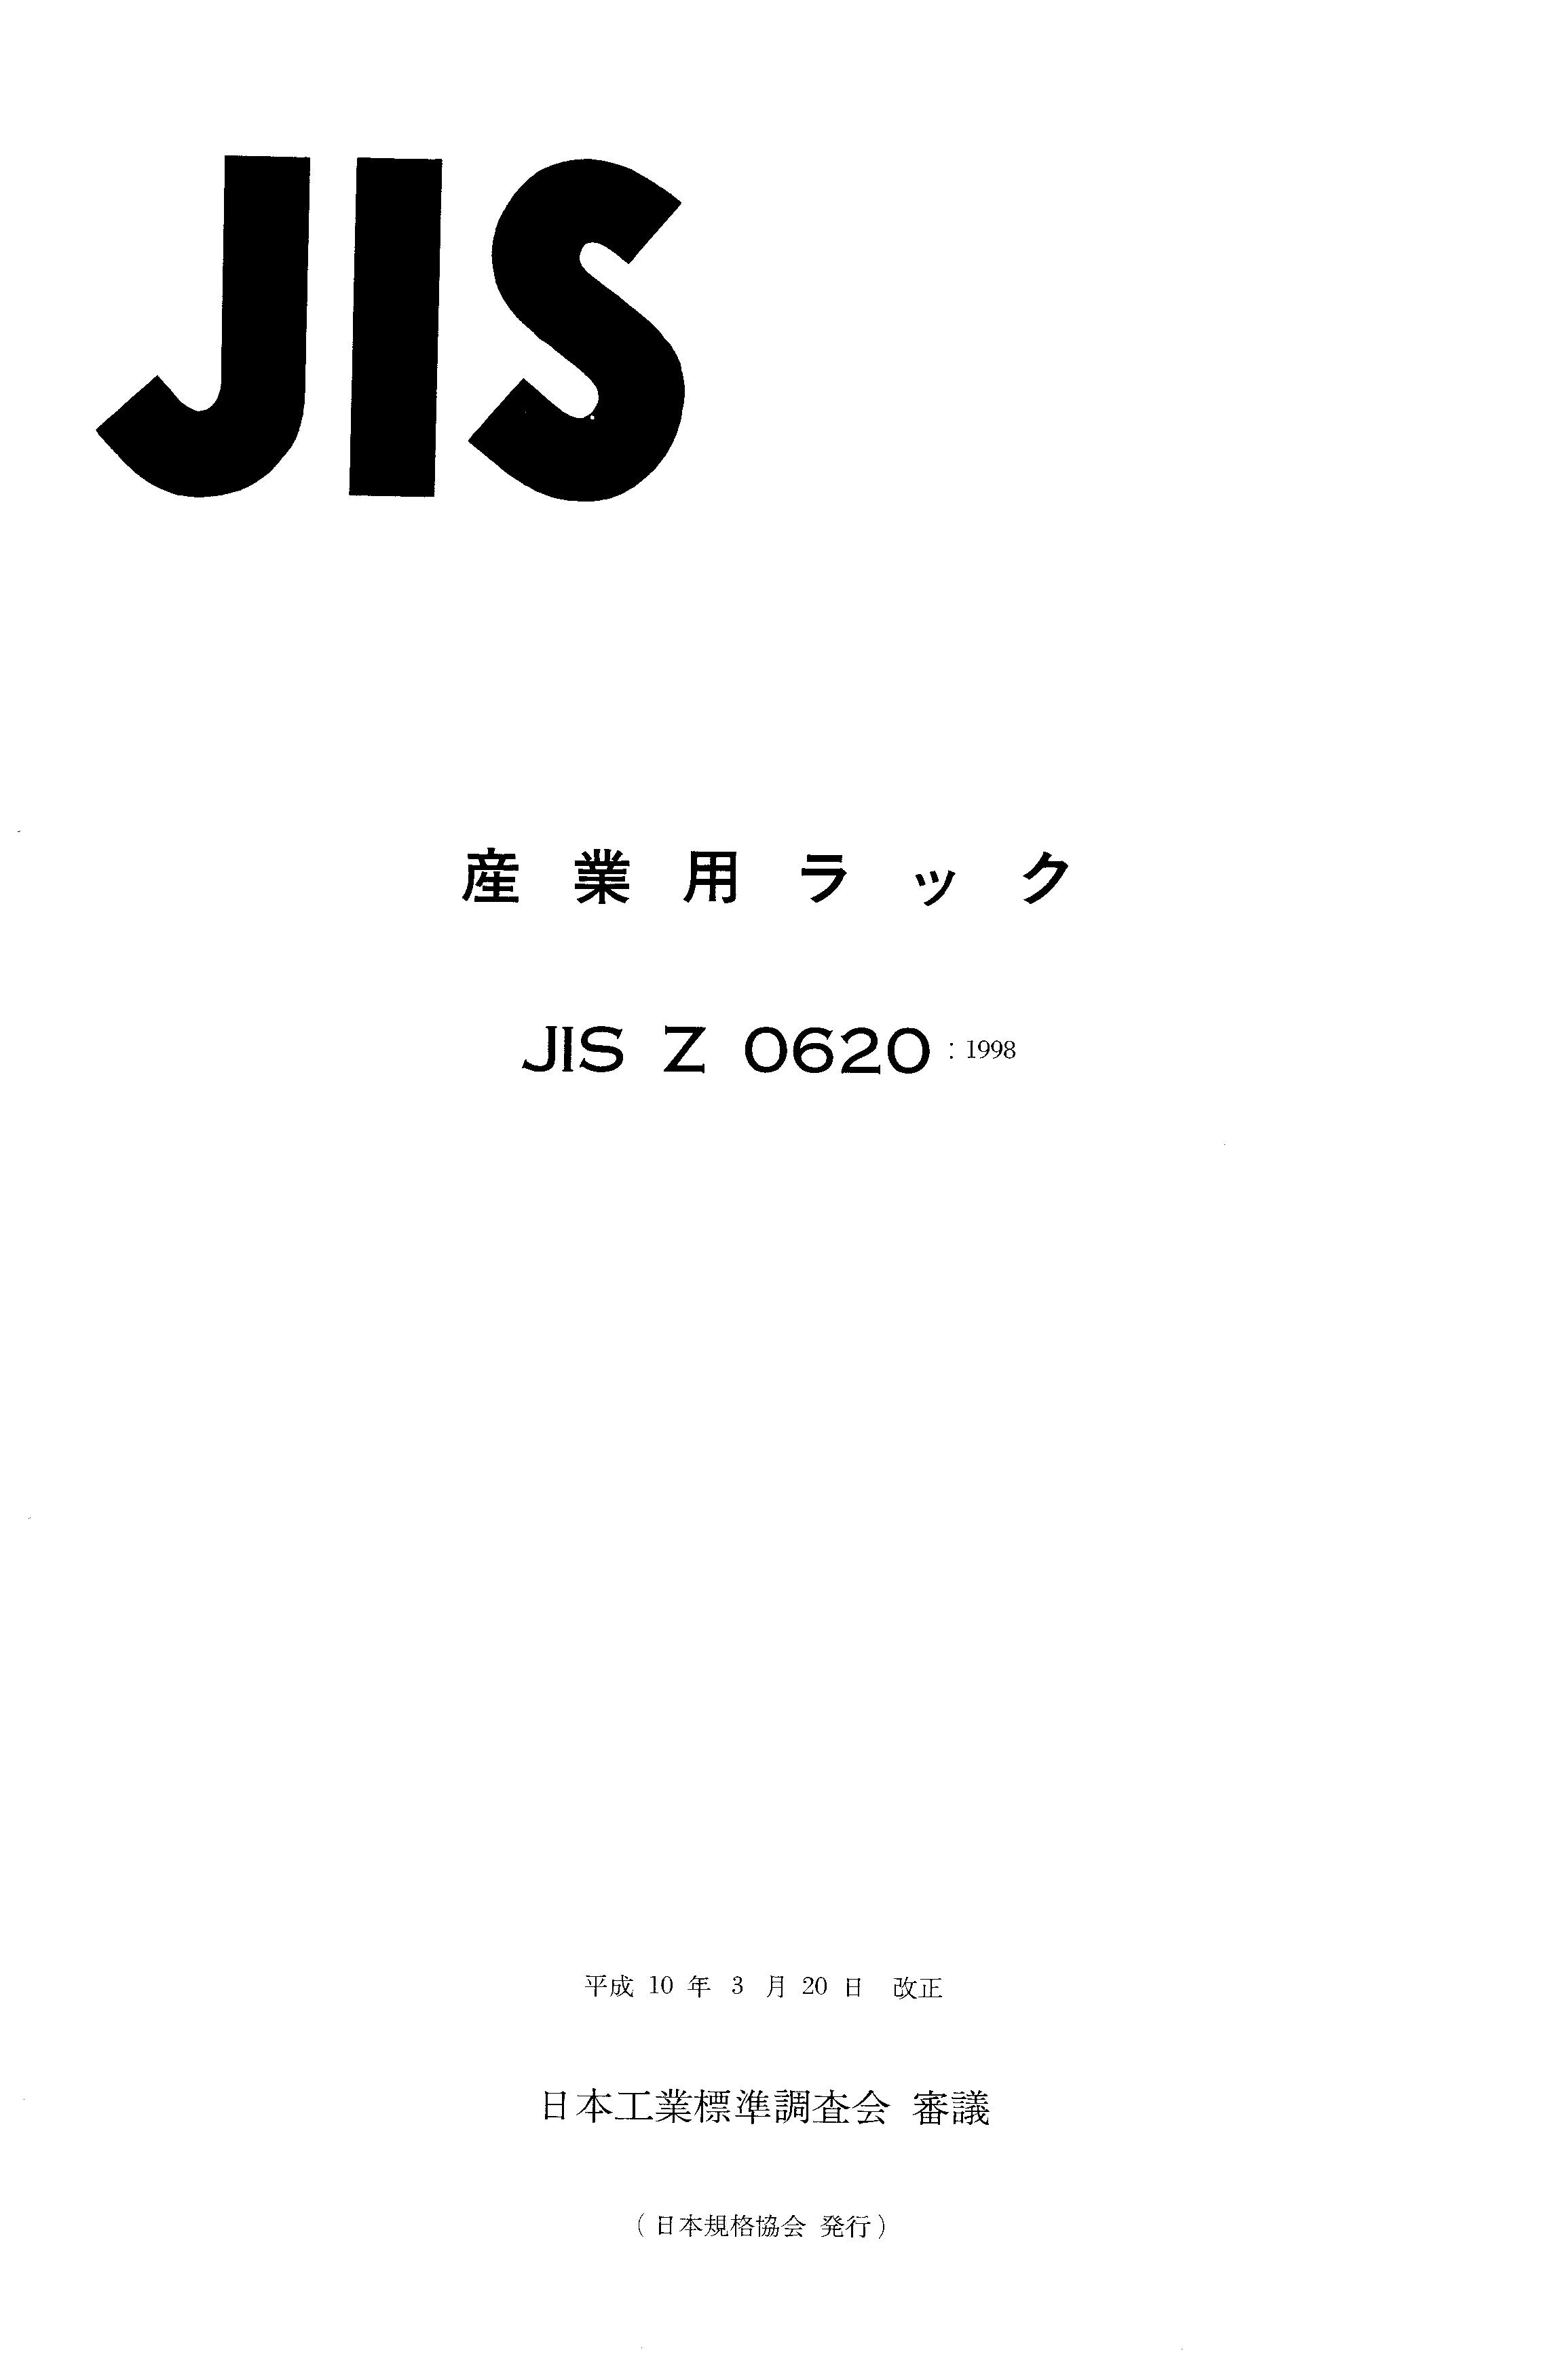 JIS Z 0620:1998封面图